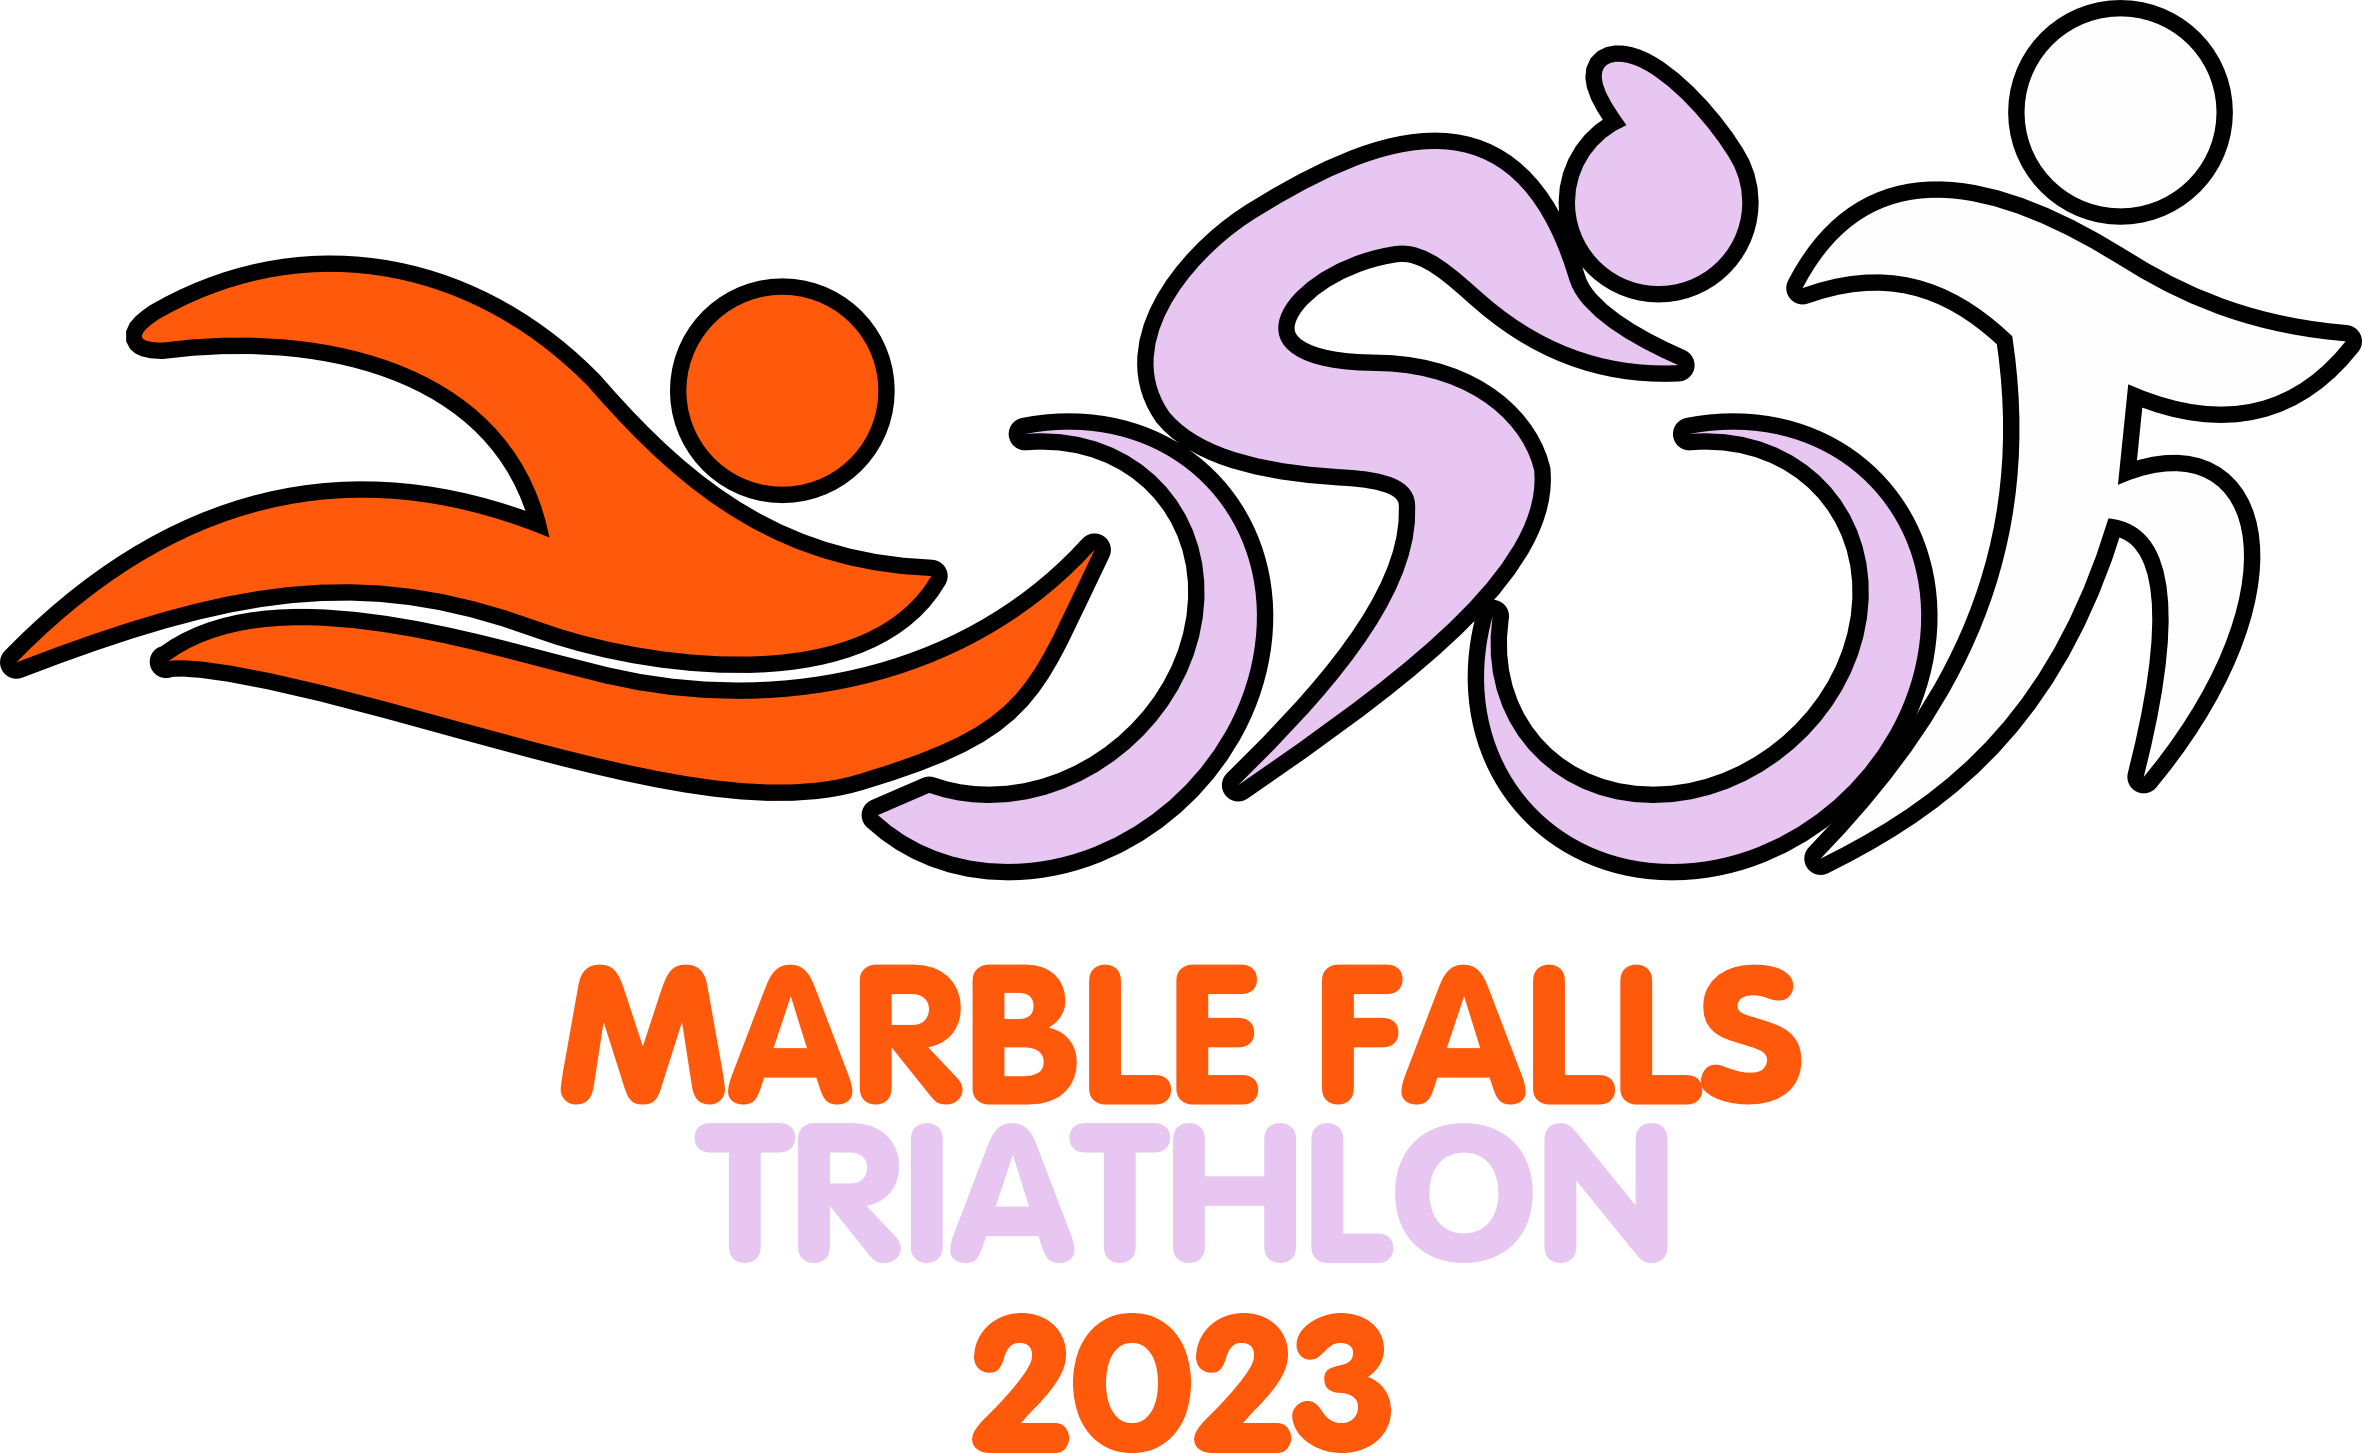 Marble Falls Triathlon logo on RaceRaves